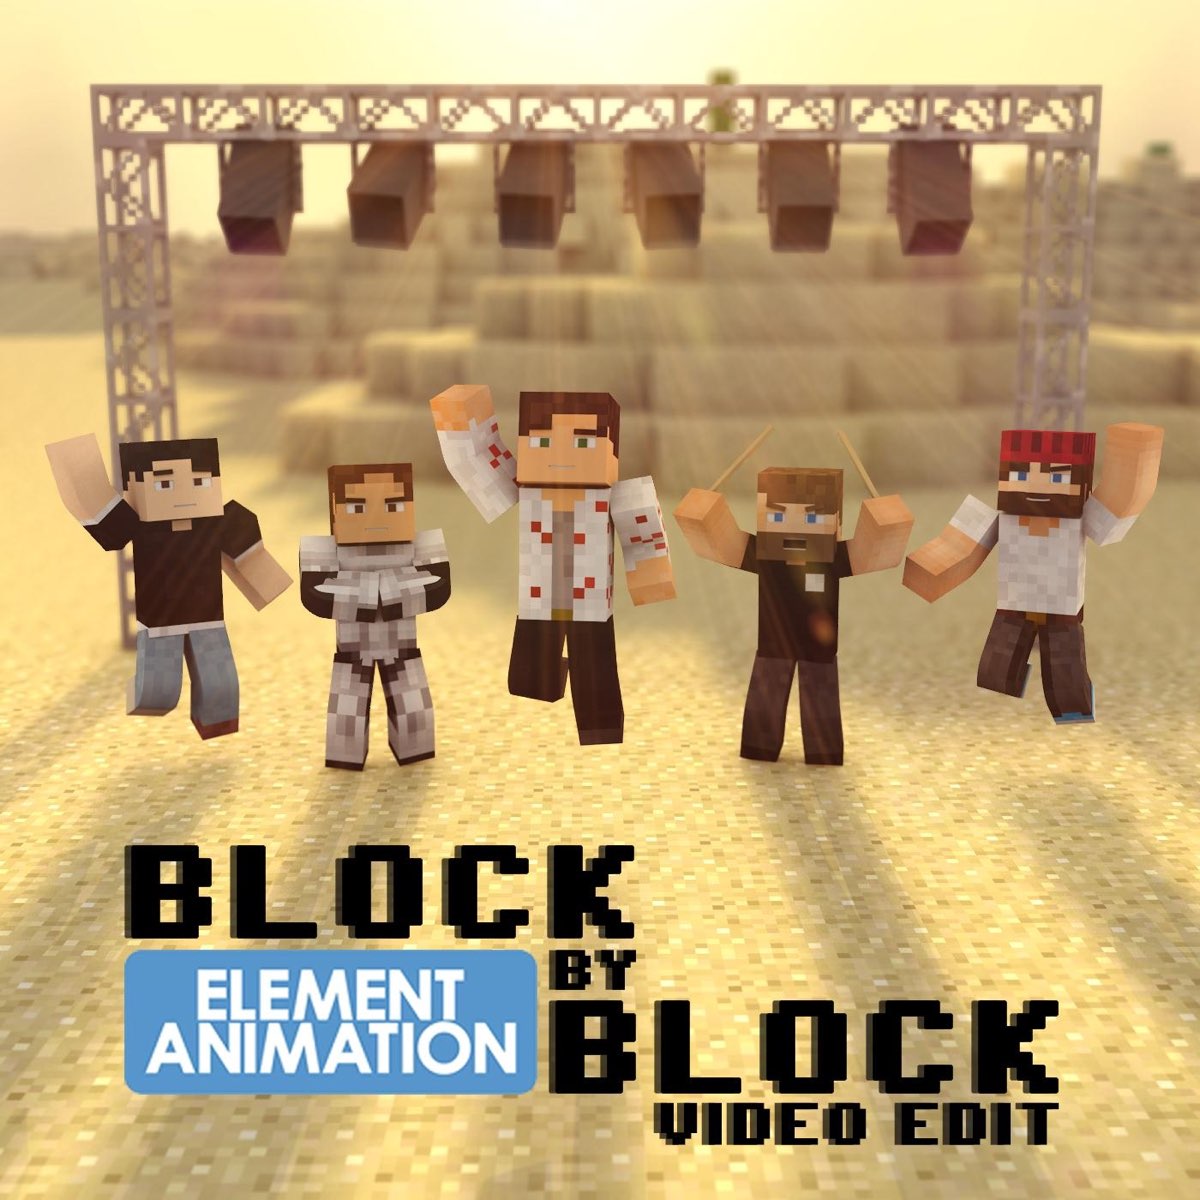 Block element. Element animation. Steve element animation. Block animations. Element animation 2.